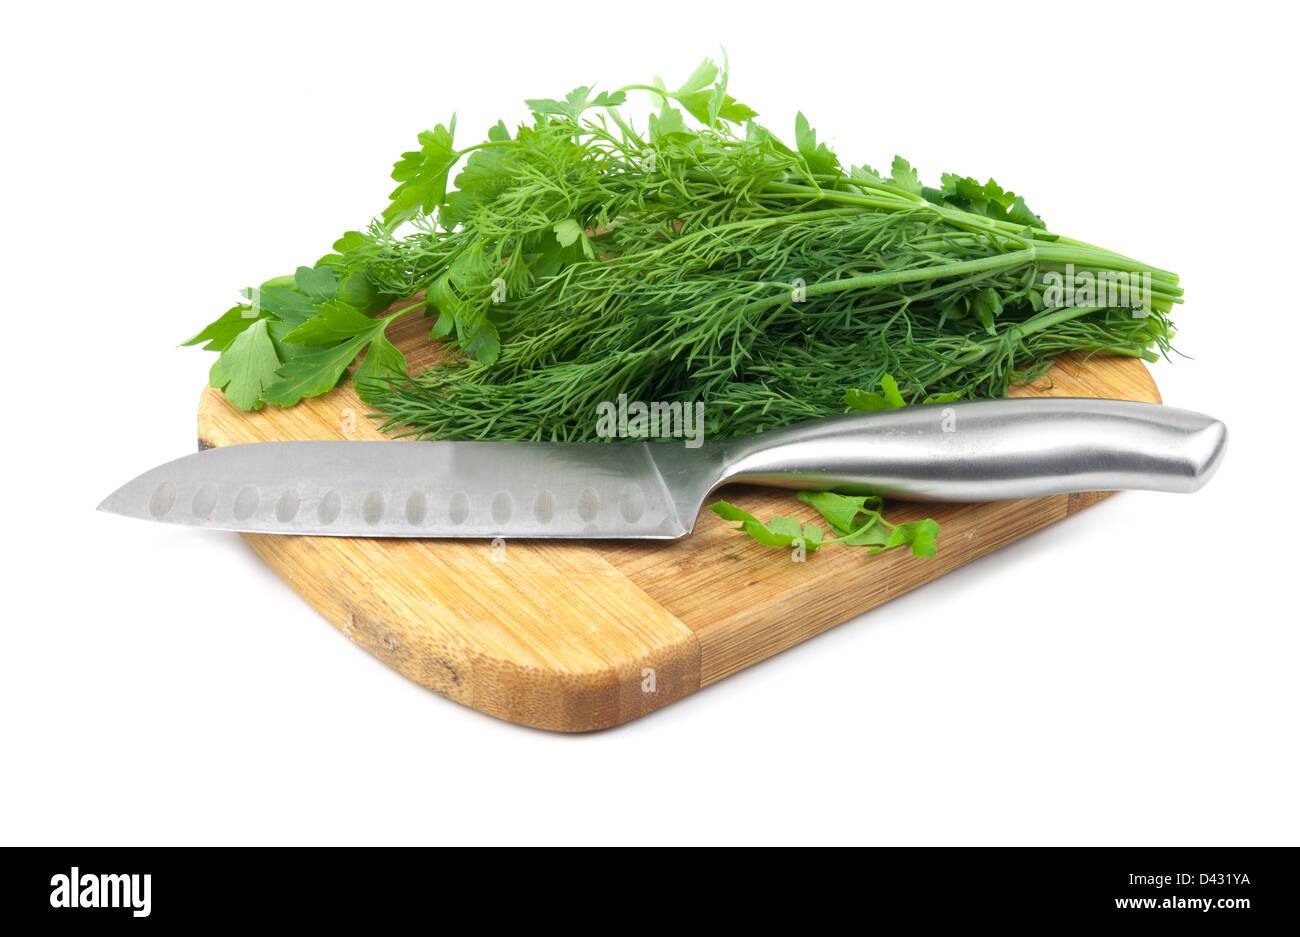 https://c8.alamy.com/comp/D431YA/fresh-dill-and-parsley-on-a-cutting-board-with-knife-D431YA.jpg